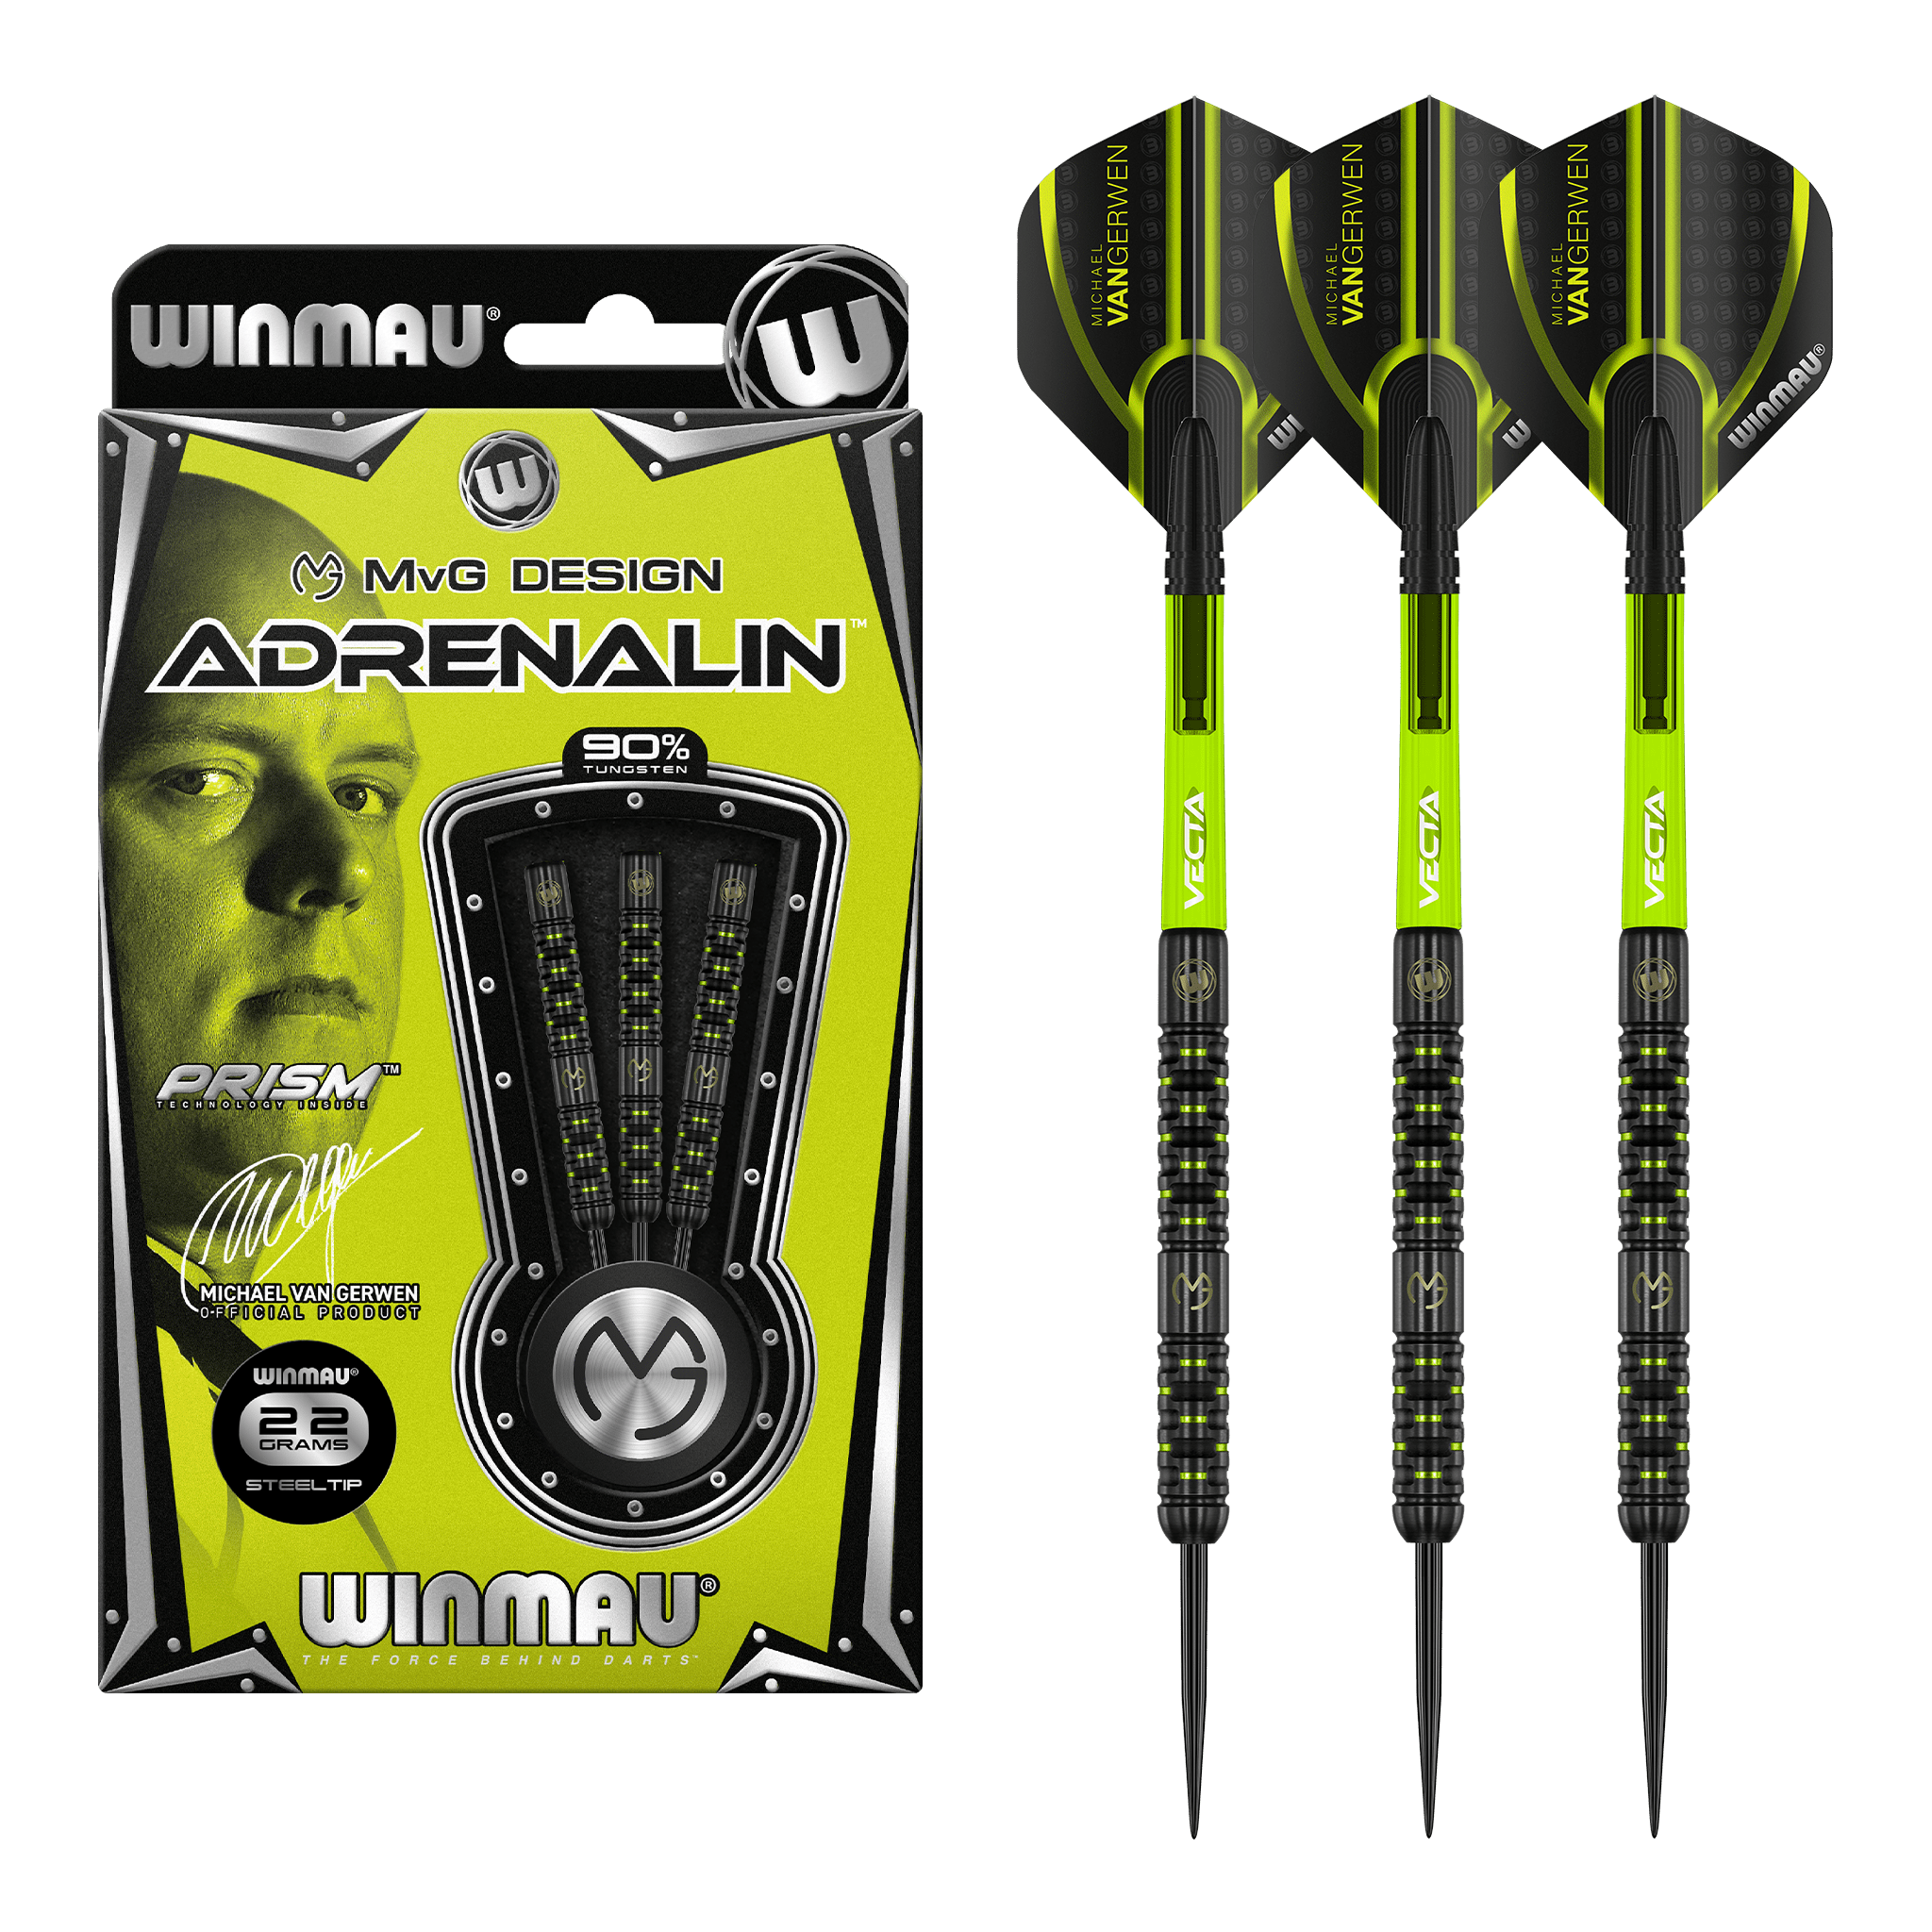 Winmau MVG Adrenalin Steel Tip Darts - 90% Tungsten - 22 Grams Darts